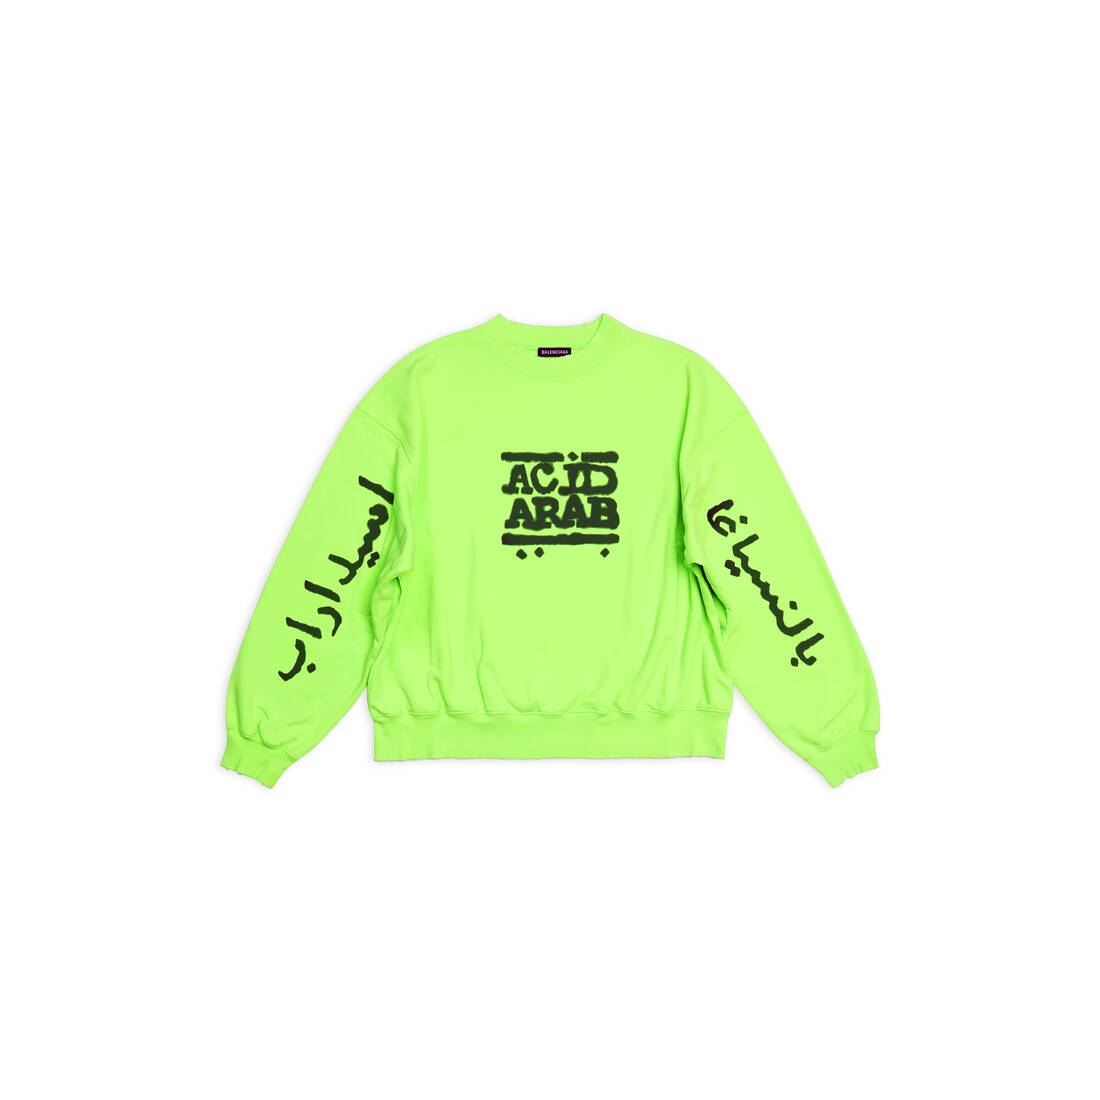 Balenciaga Music Acid Arab Merch Sweatshirt Regular Fit in neon green and black medium fleece